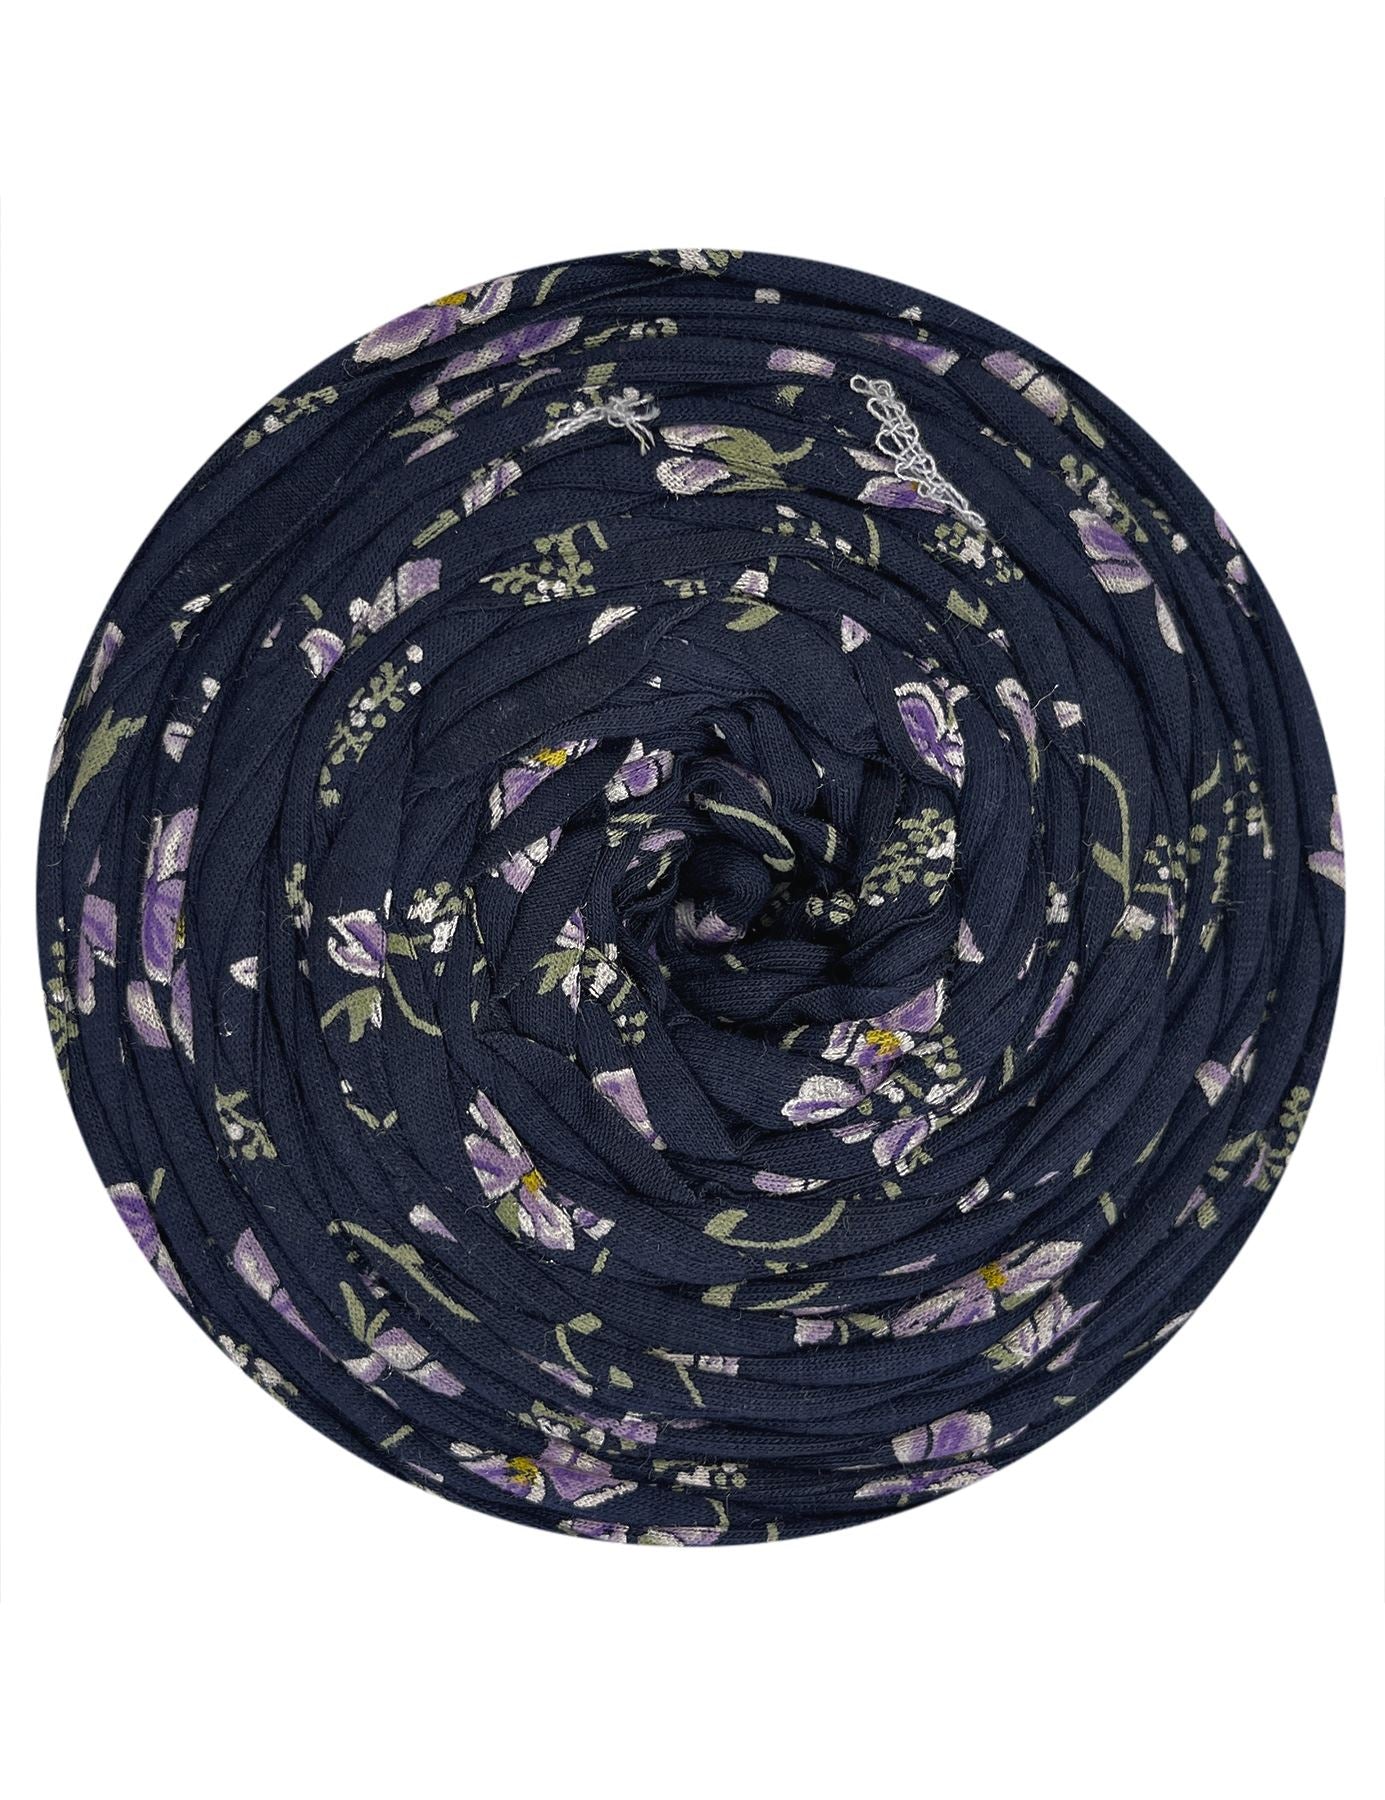 Navy floral t-shirt yarn (100-120m)